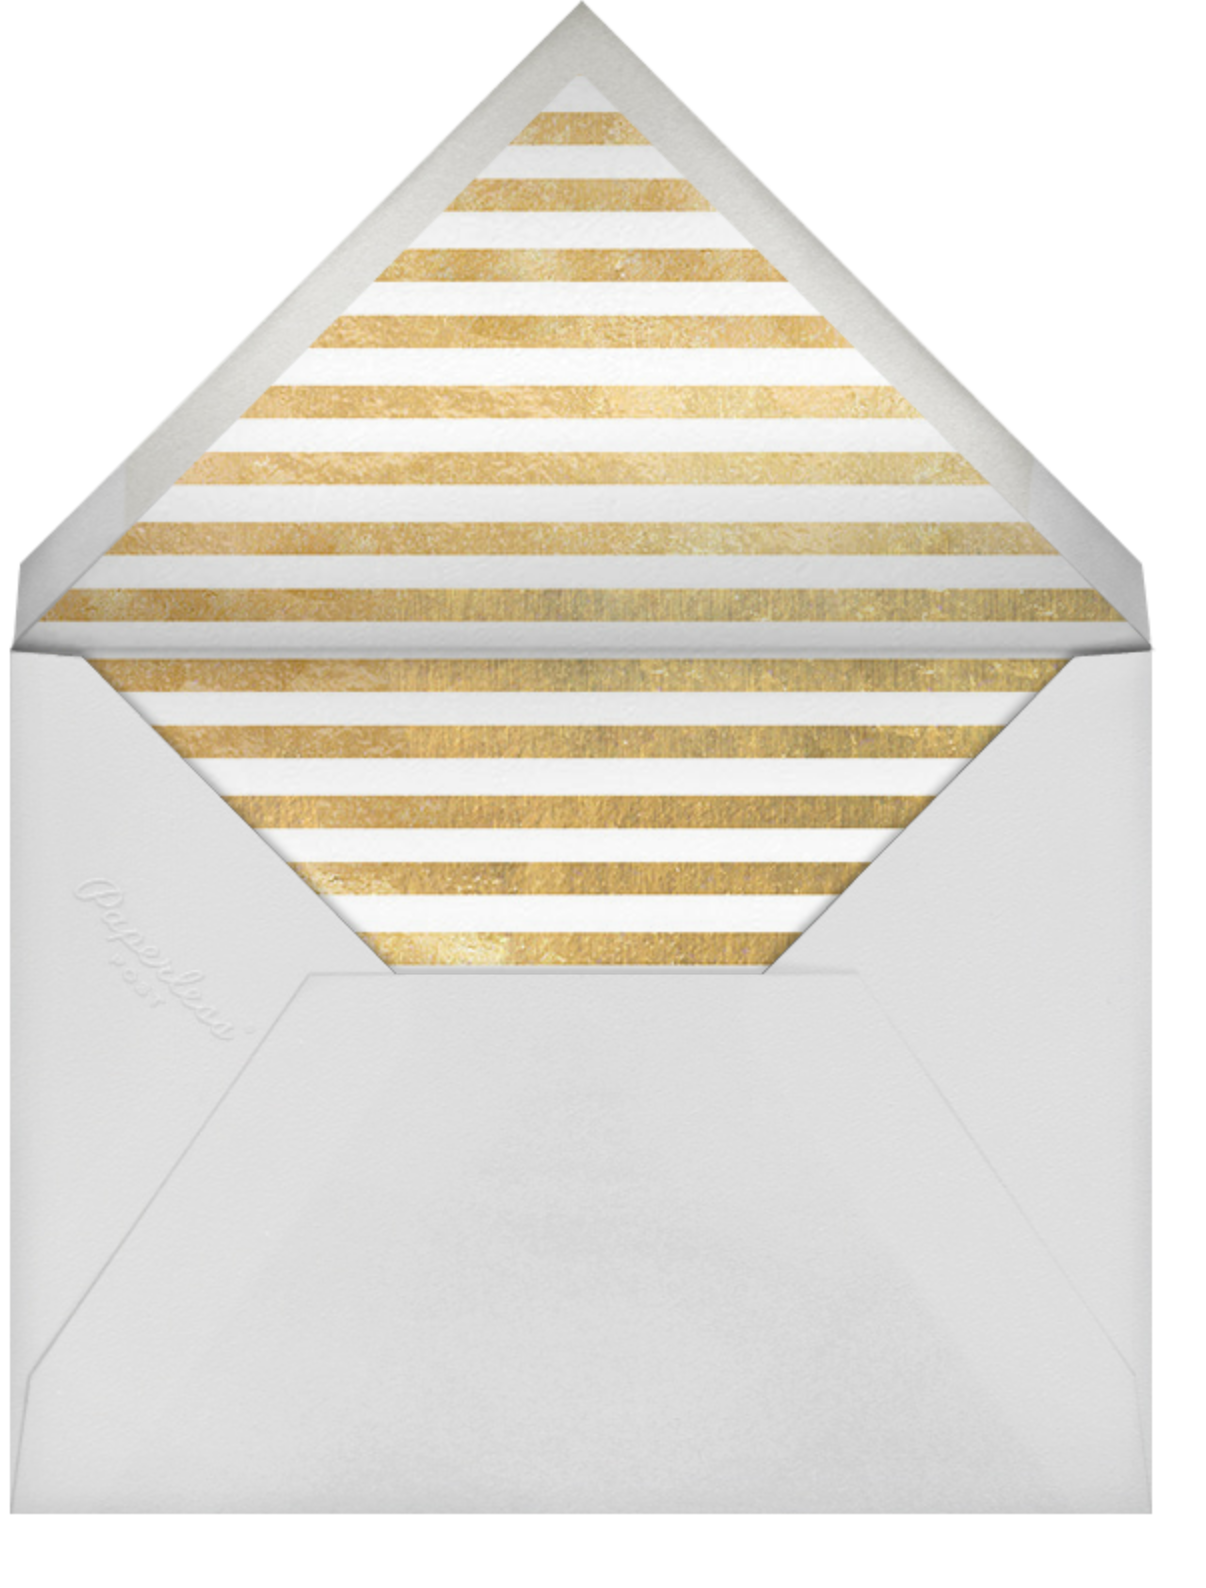 Confetti (Tall Multi-Photo) - Gold - kate spade new york - Envelope